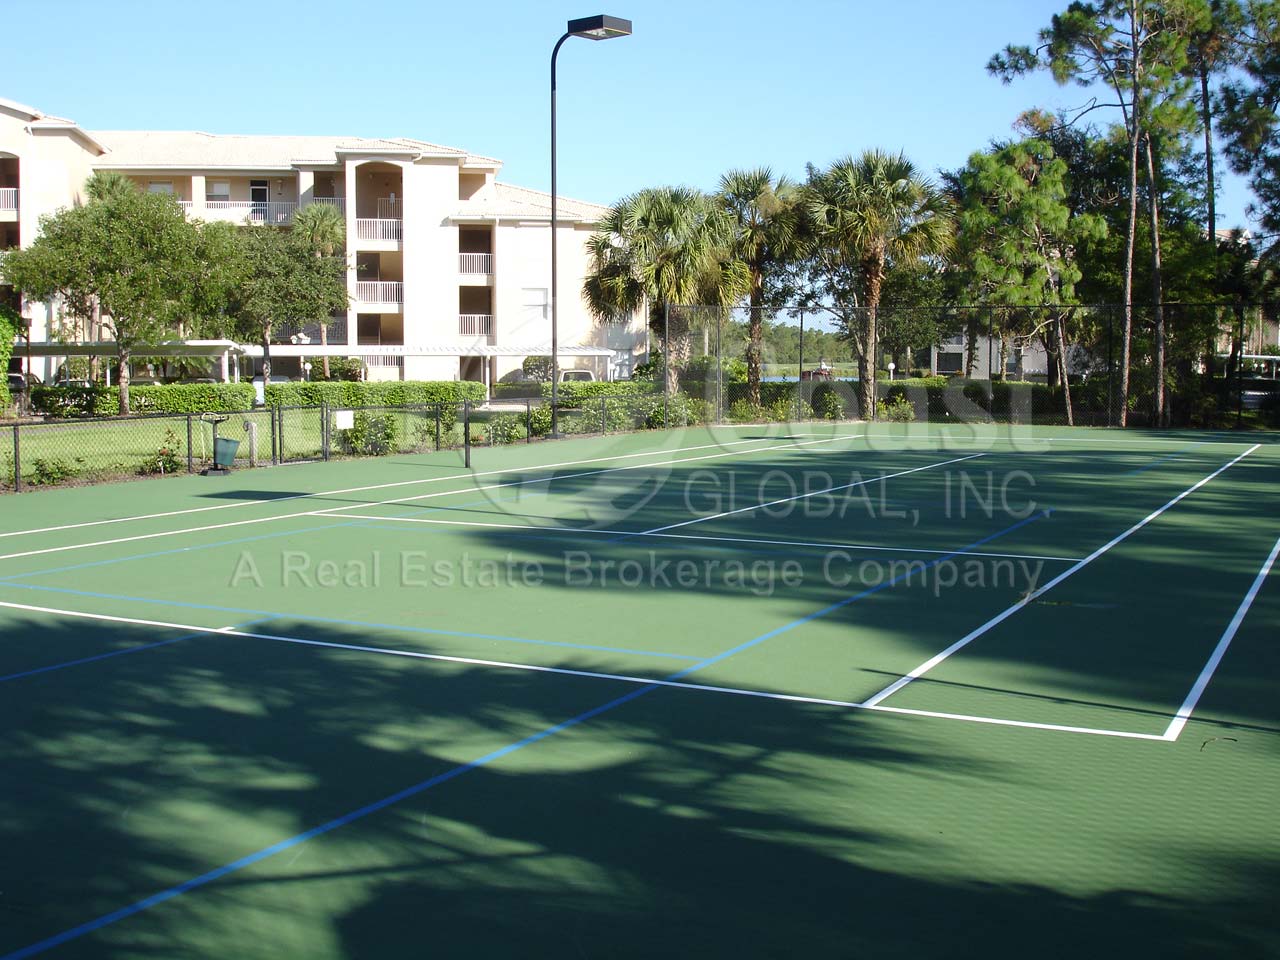 Stoneybrook tennis courts